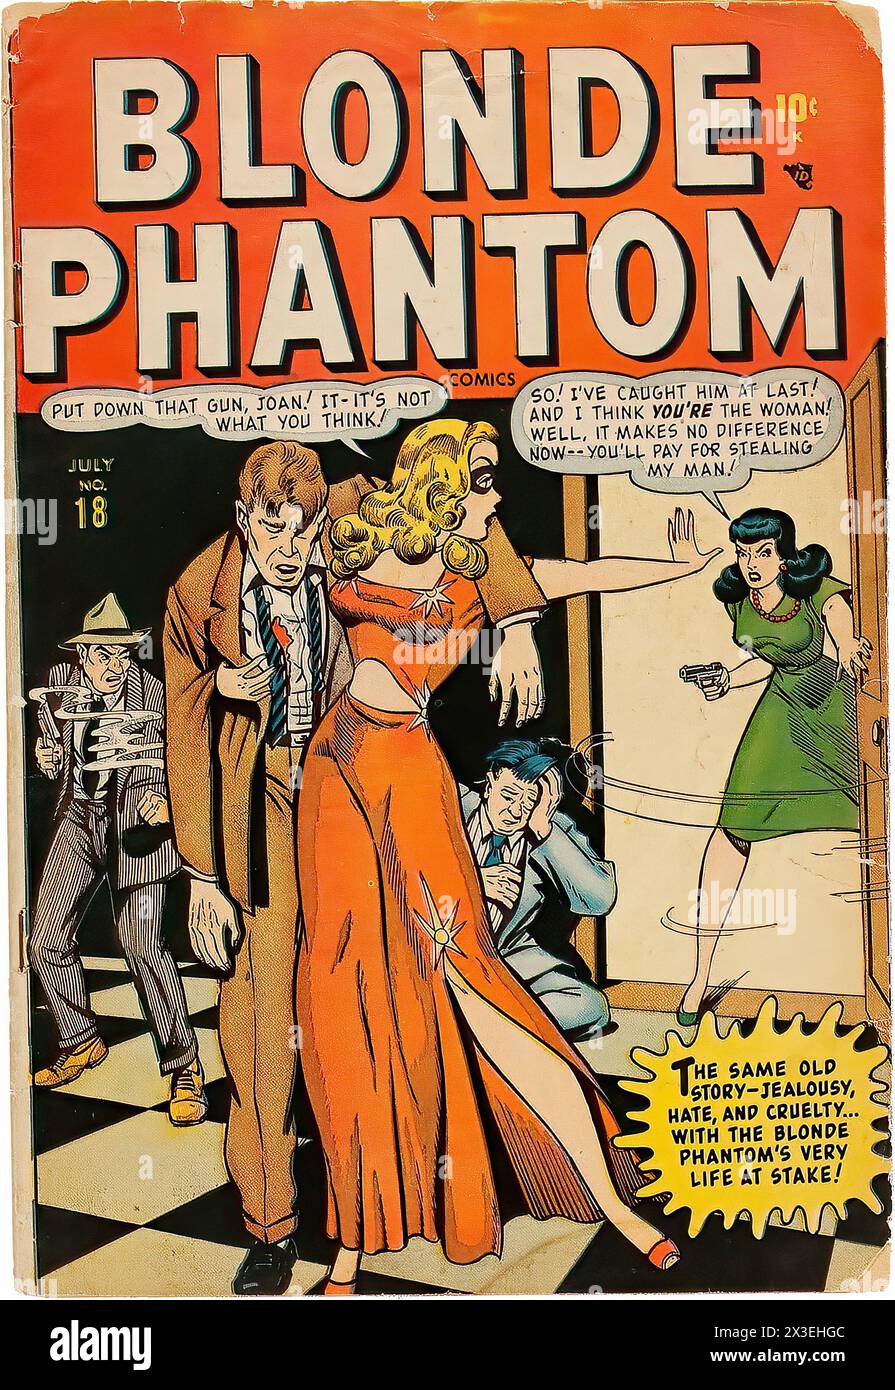 Blonde Phantom  - Vintage american illustrated publication cover Stock Photo